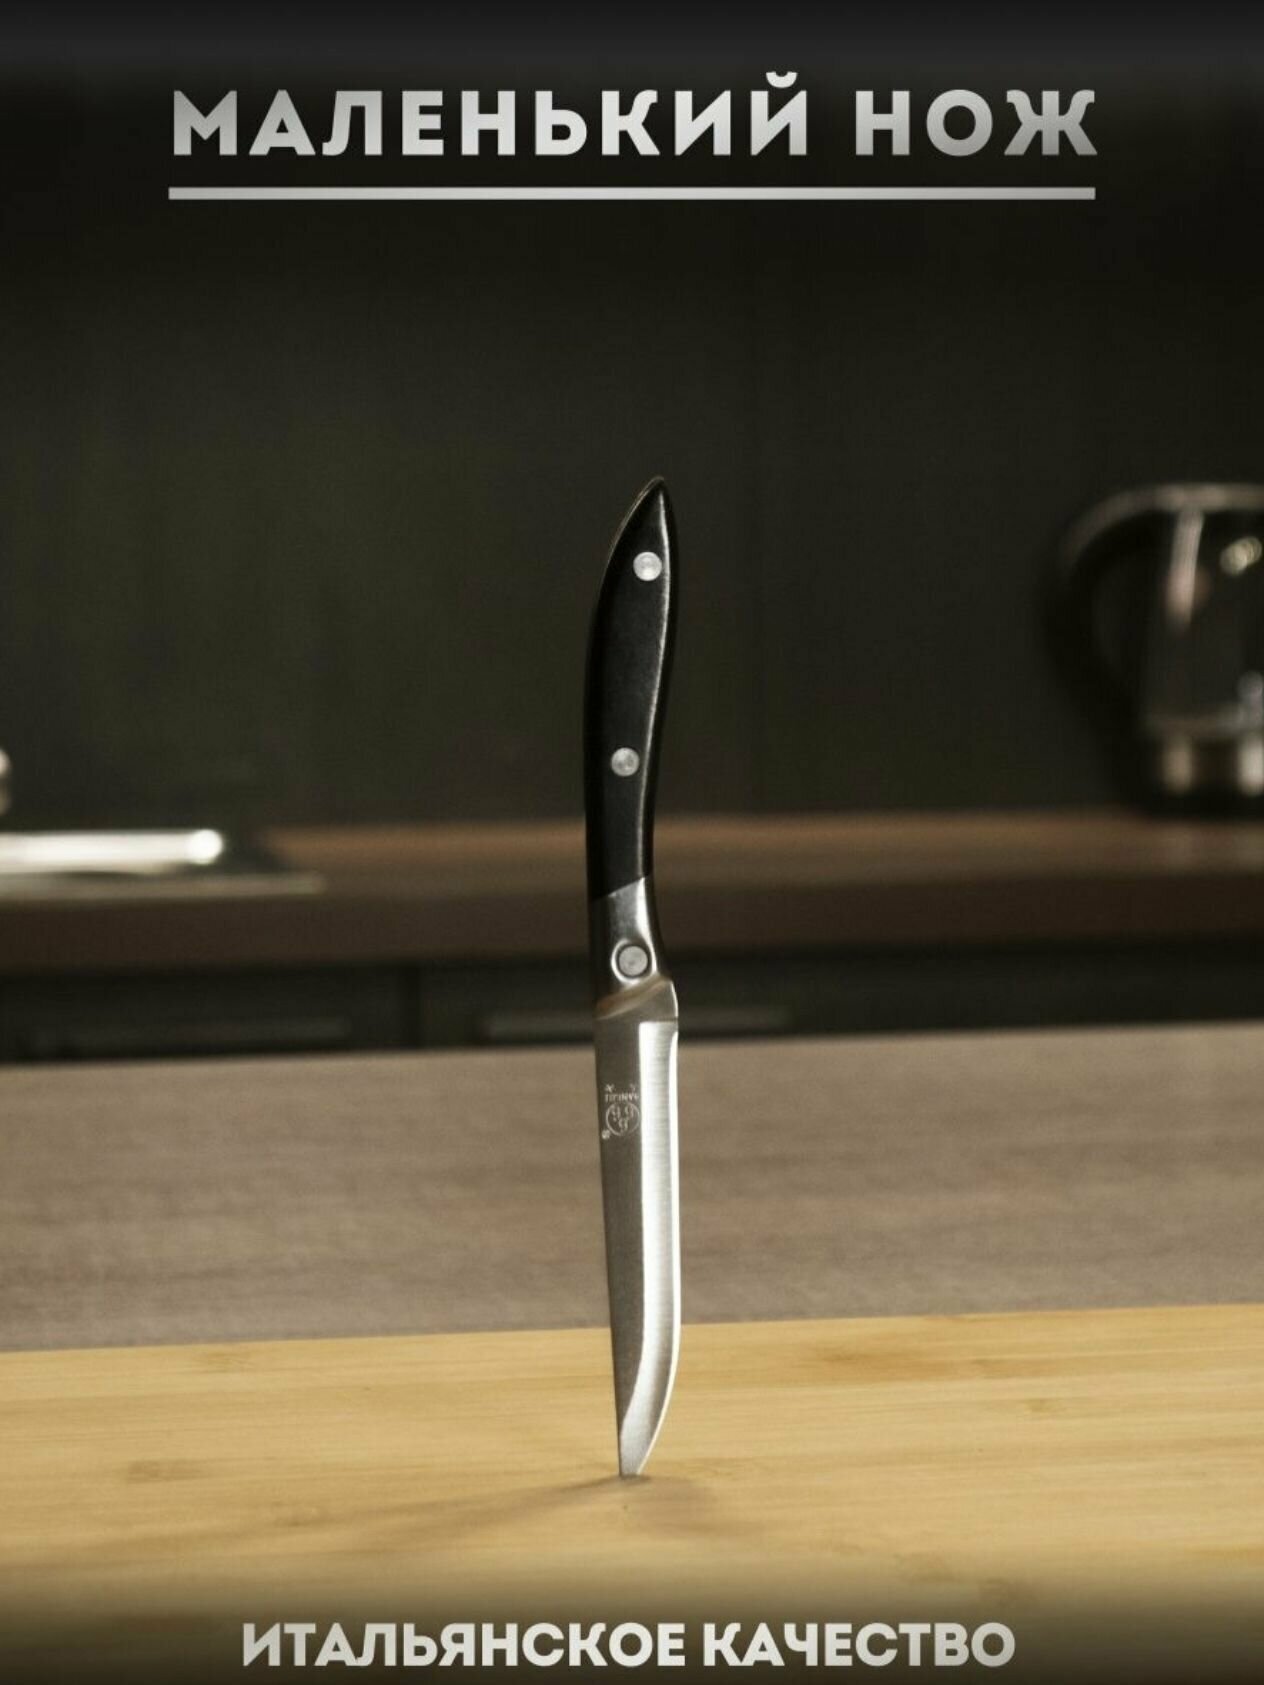 Кухонных нож 'Sanliu 666' маленький нож очень острый 18см